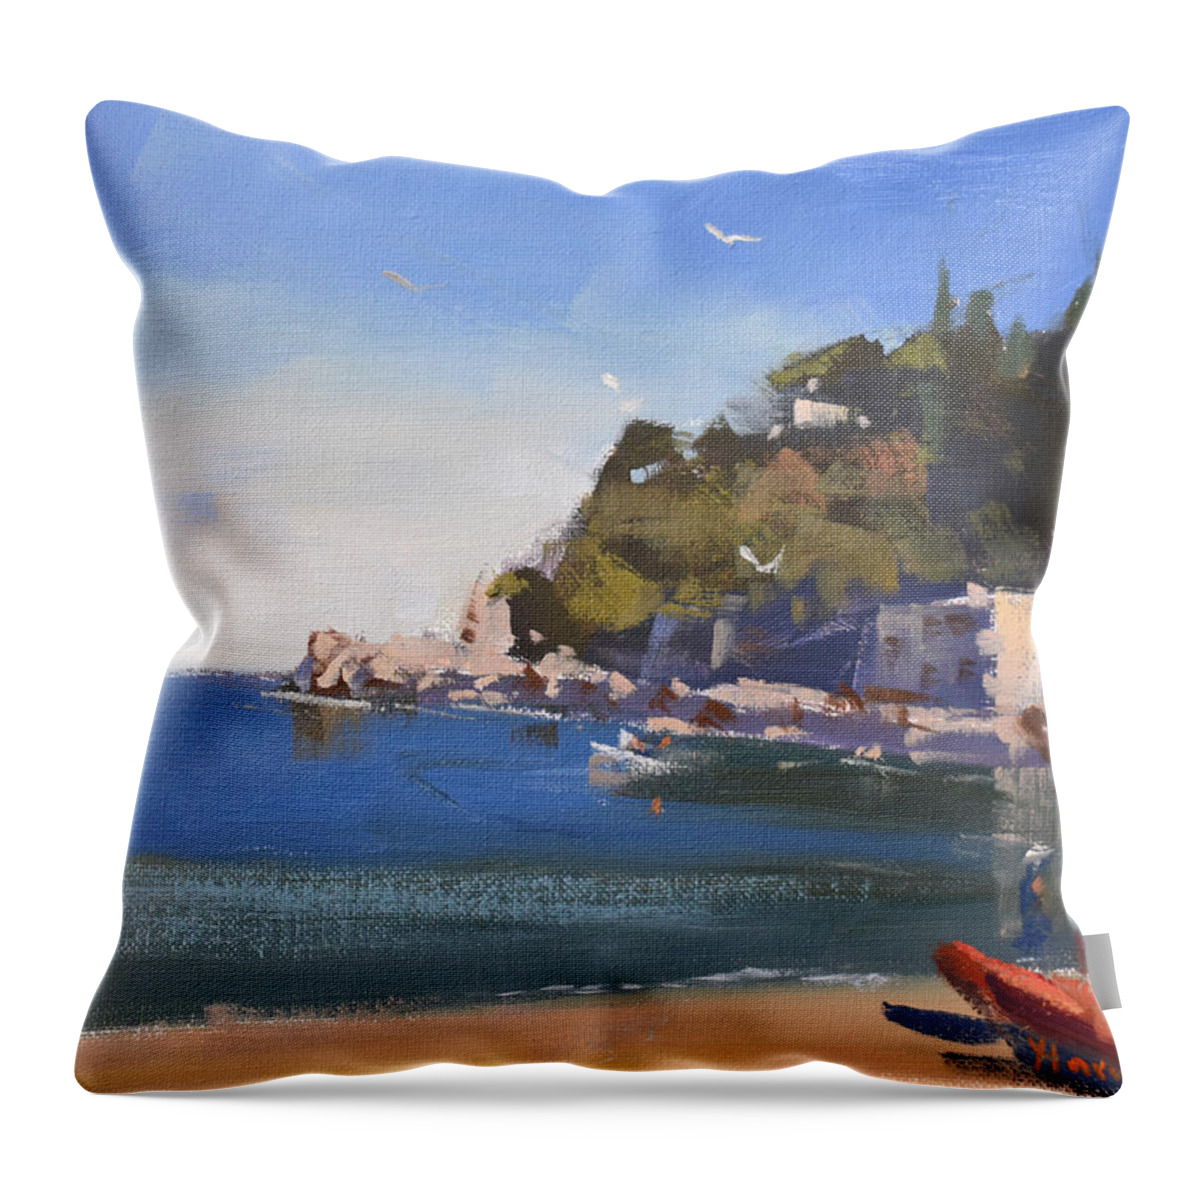 Mediterranean Sea Throw Pillow featuring the painting Mediterranean Sea by Ylli Haruni